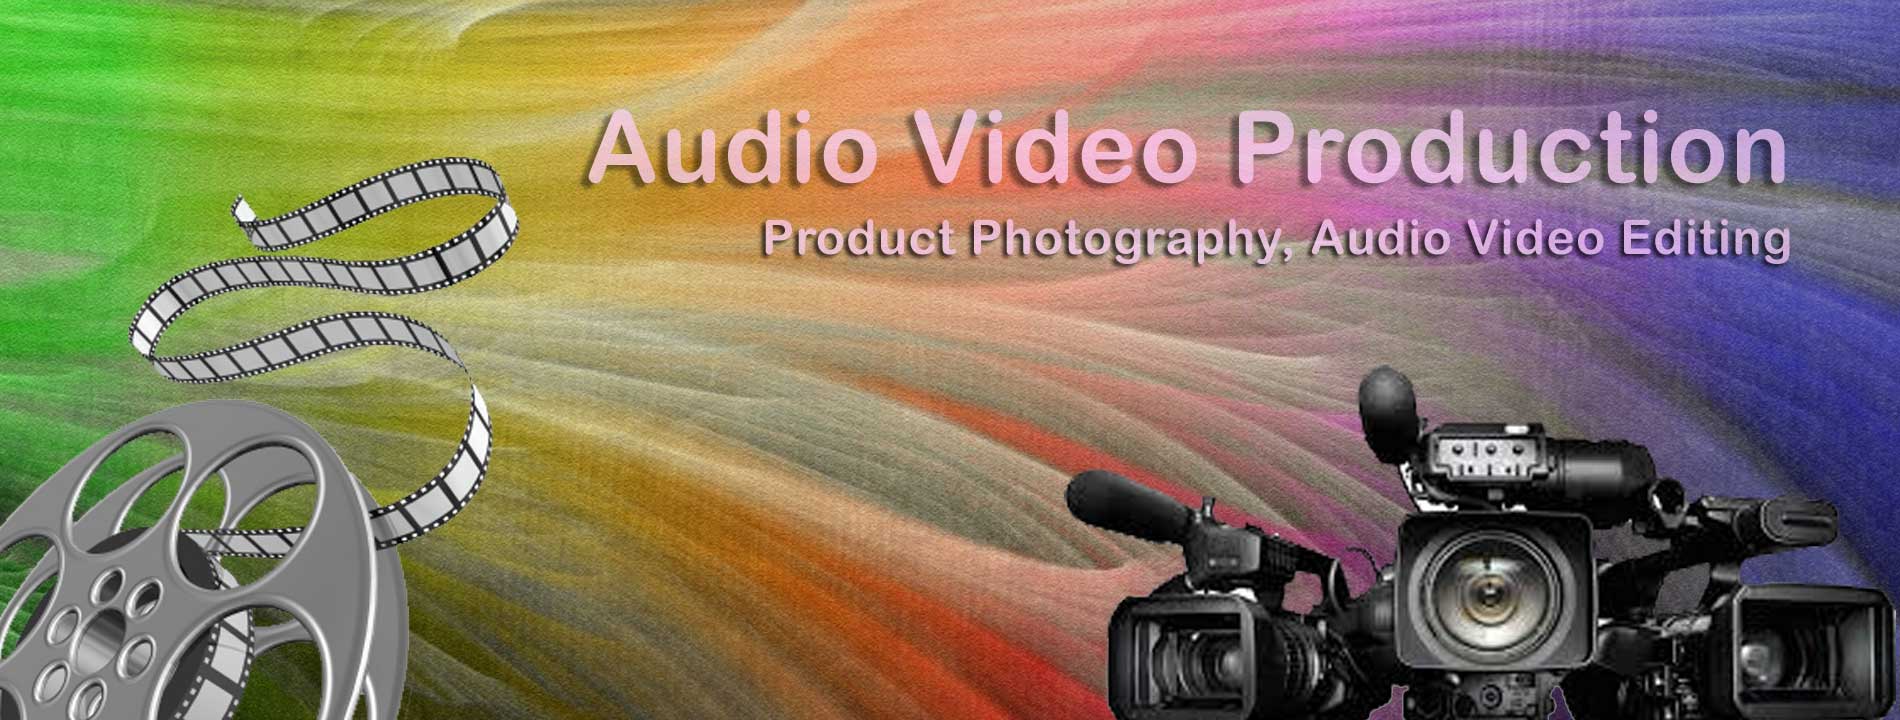 audio video production 